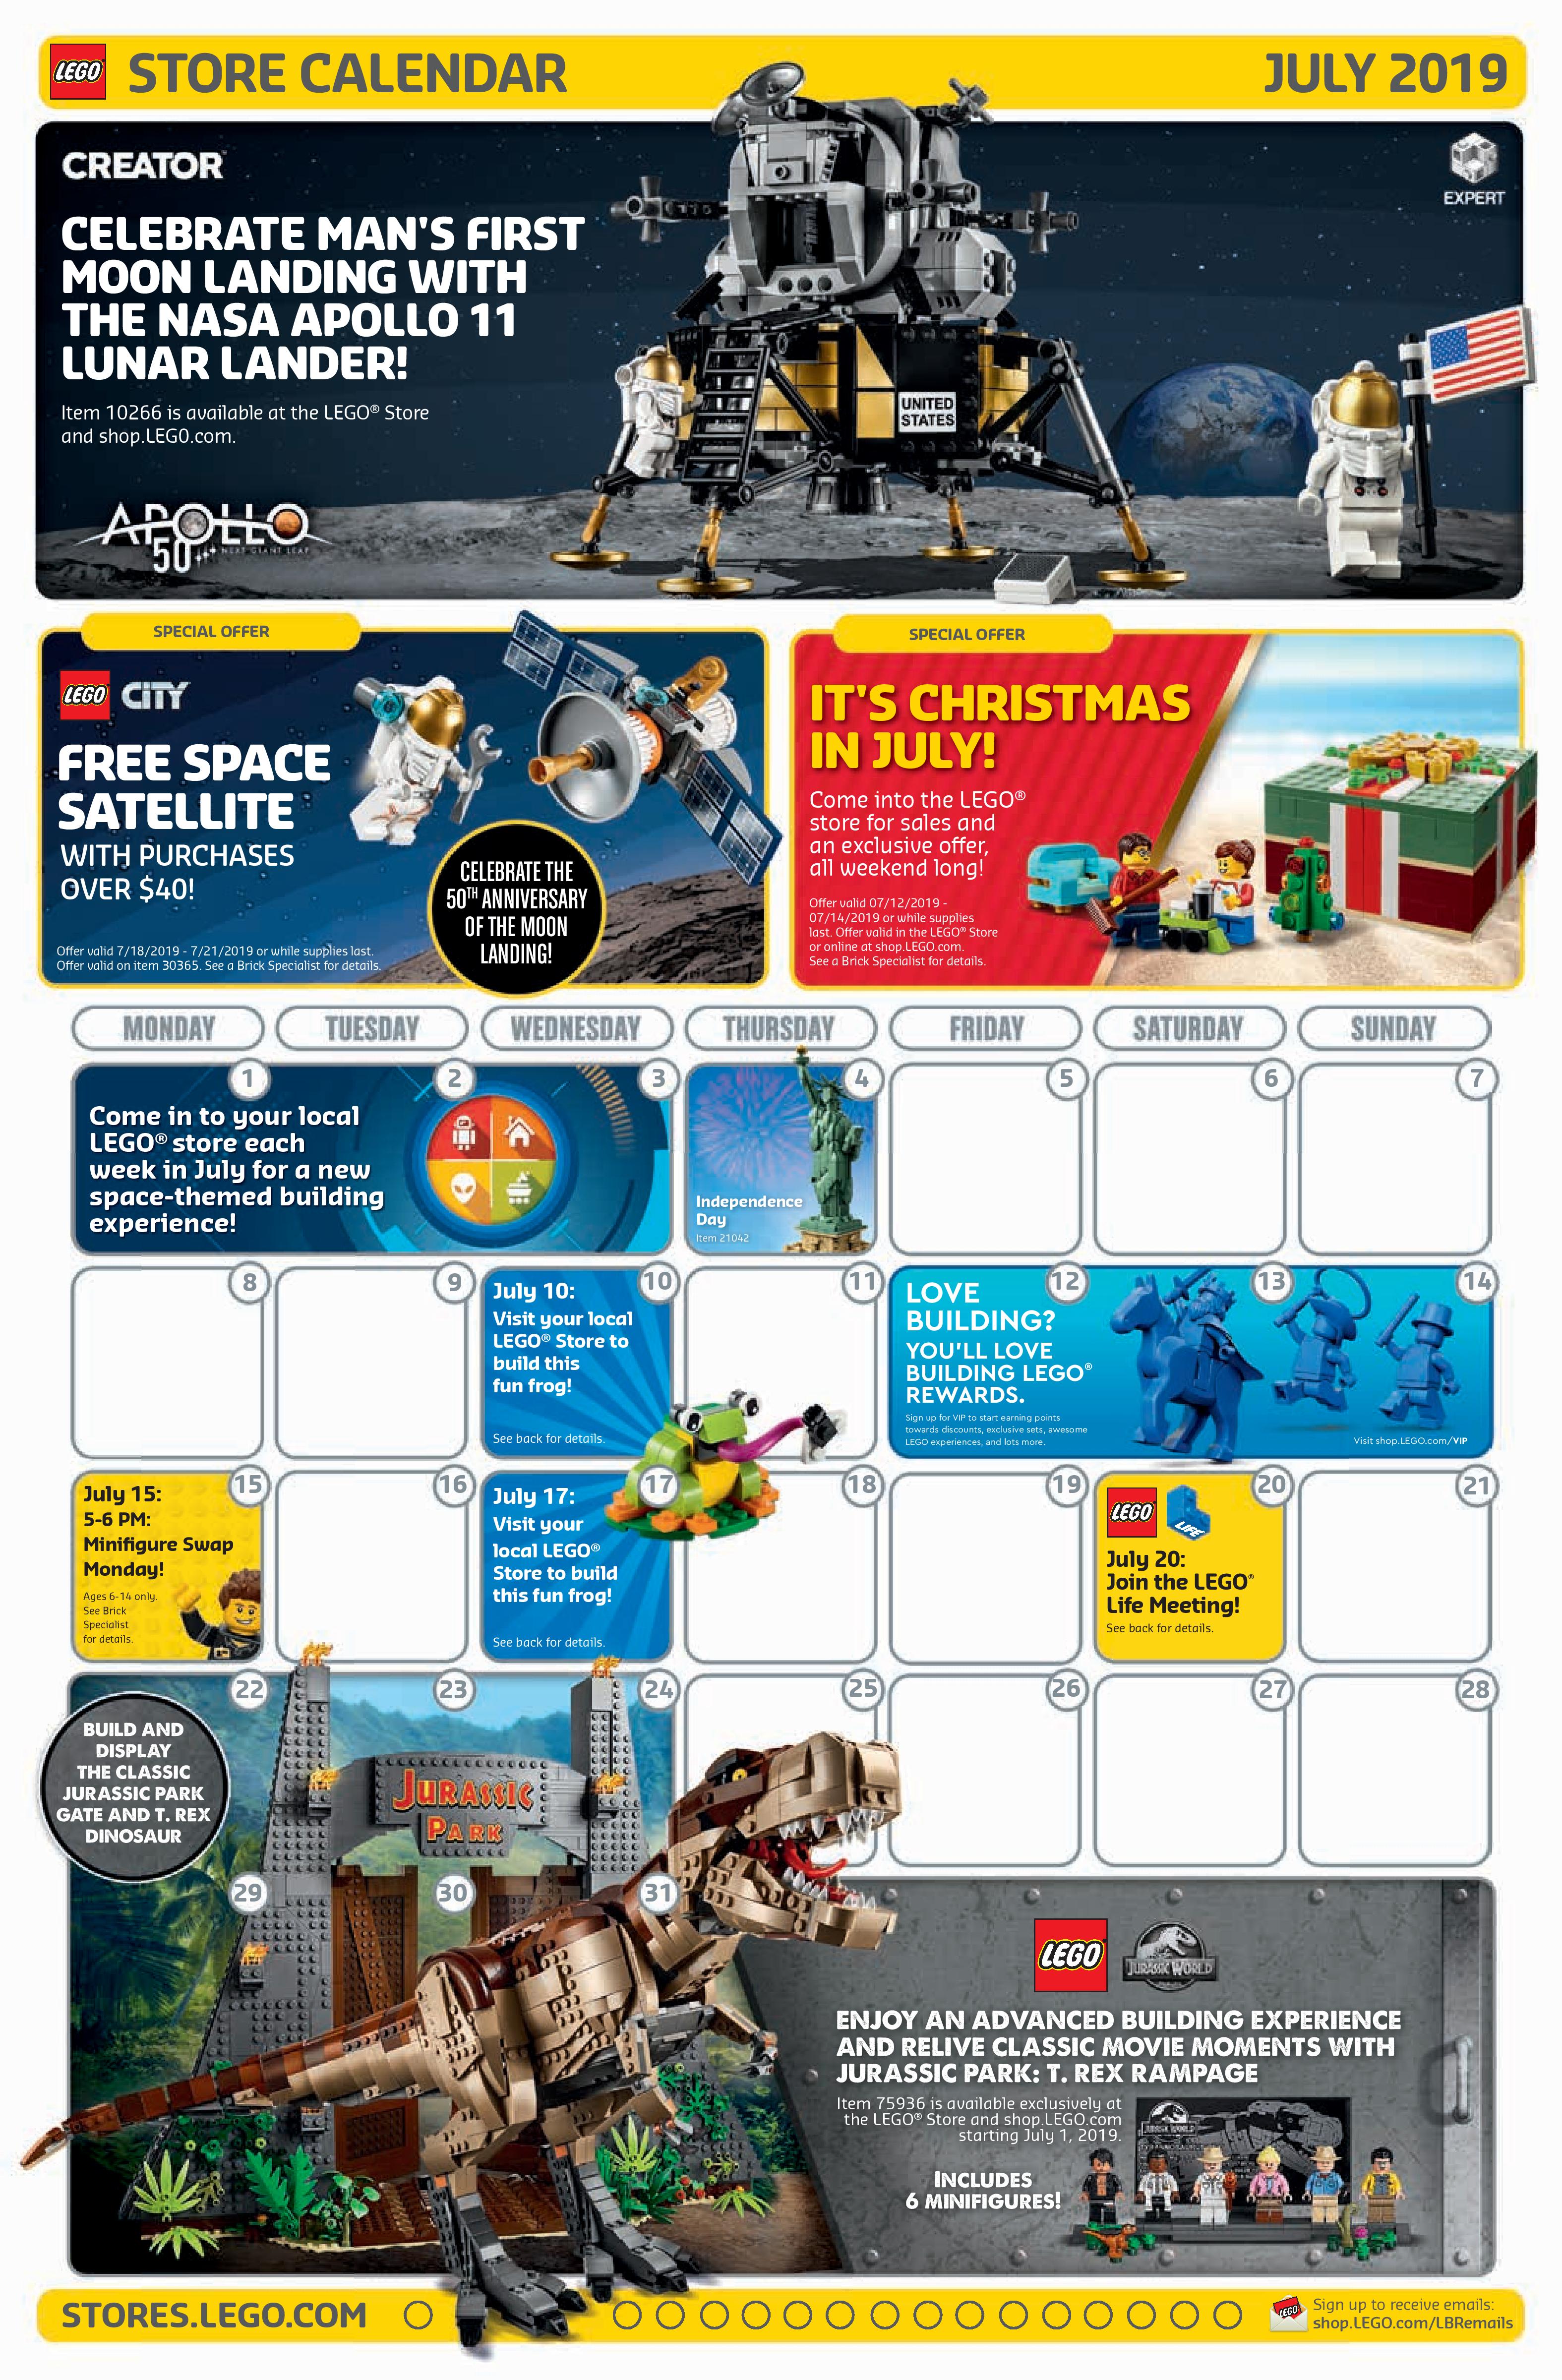 Lego July 2022 Calendar Lego July 2019 Store Calendar Promotions & Events - The Brick Fan